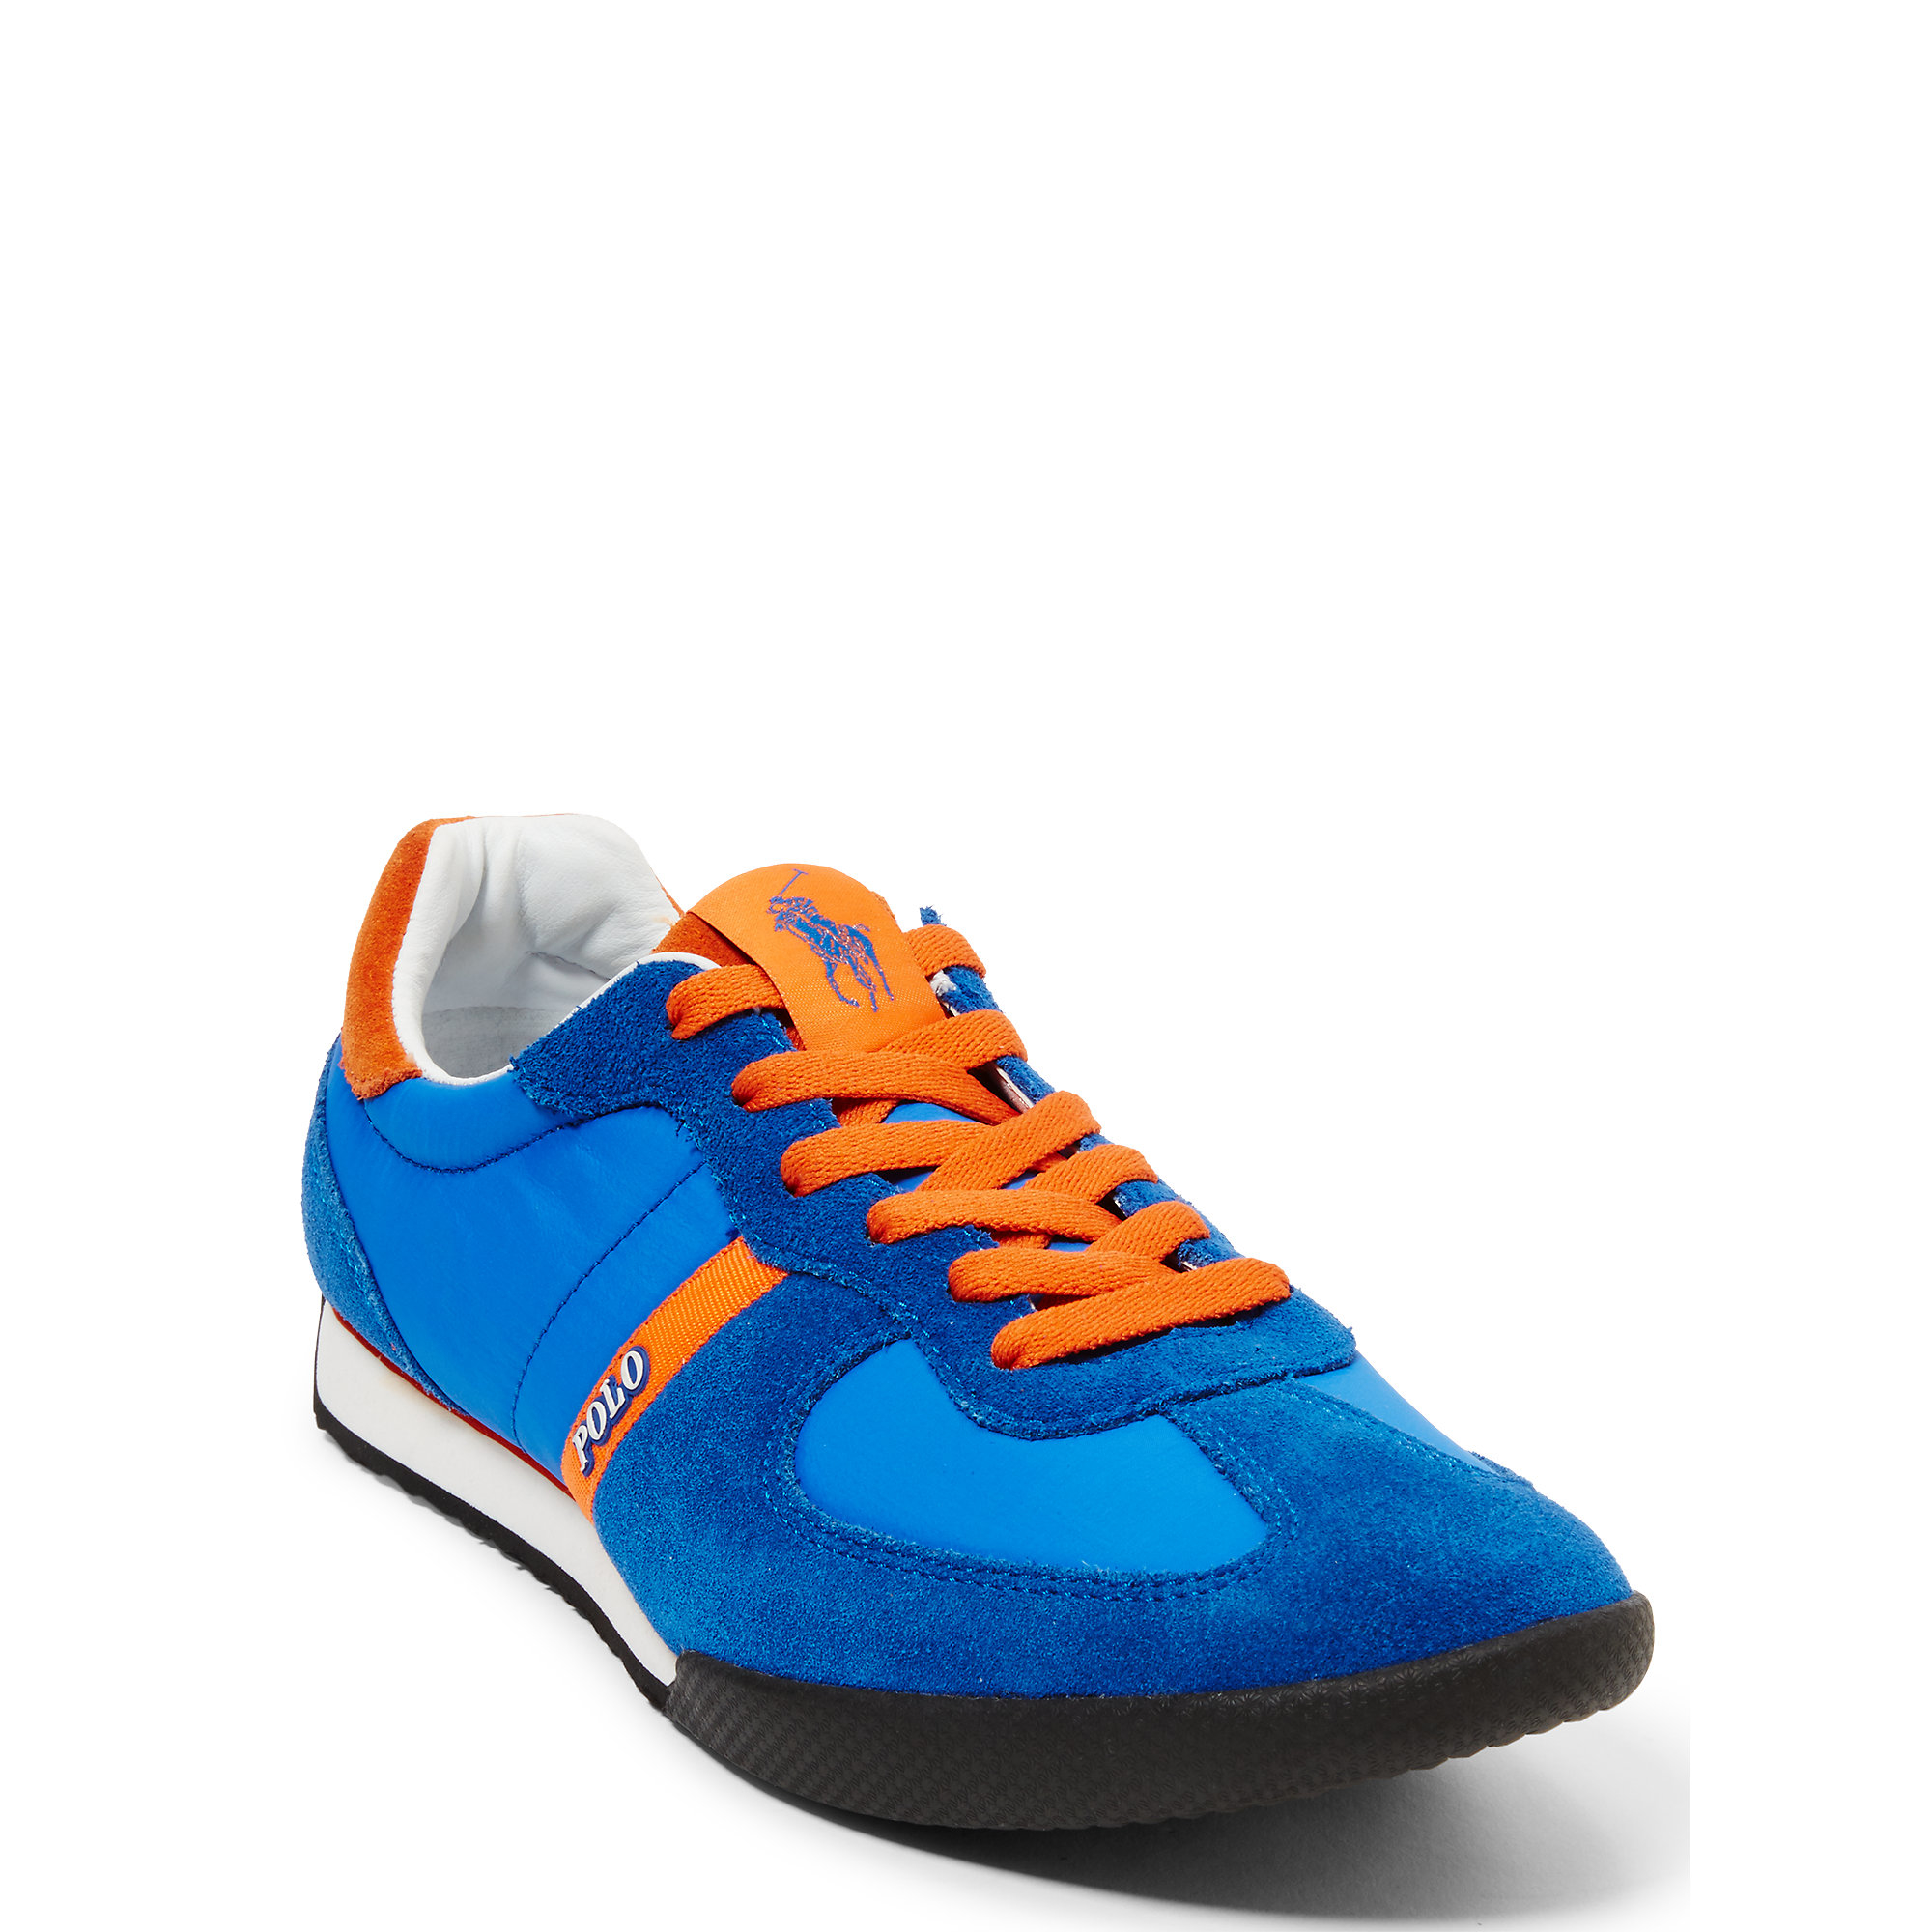 Polo Ralph Lauren Jacory Nylon-suede Sneaker in Orange for Men - Lyst